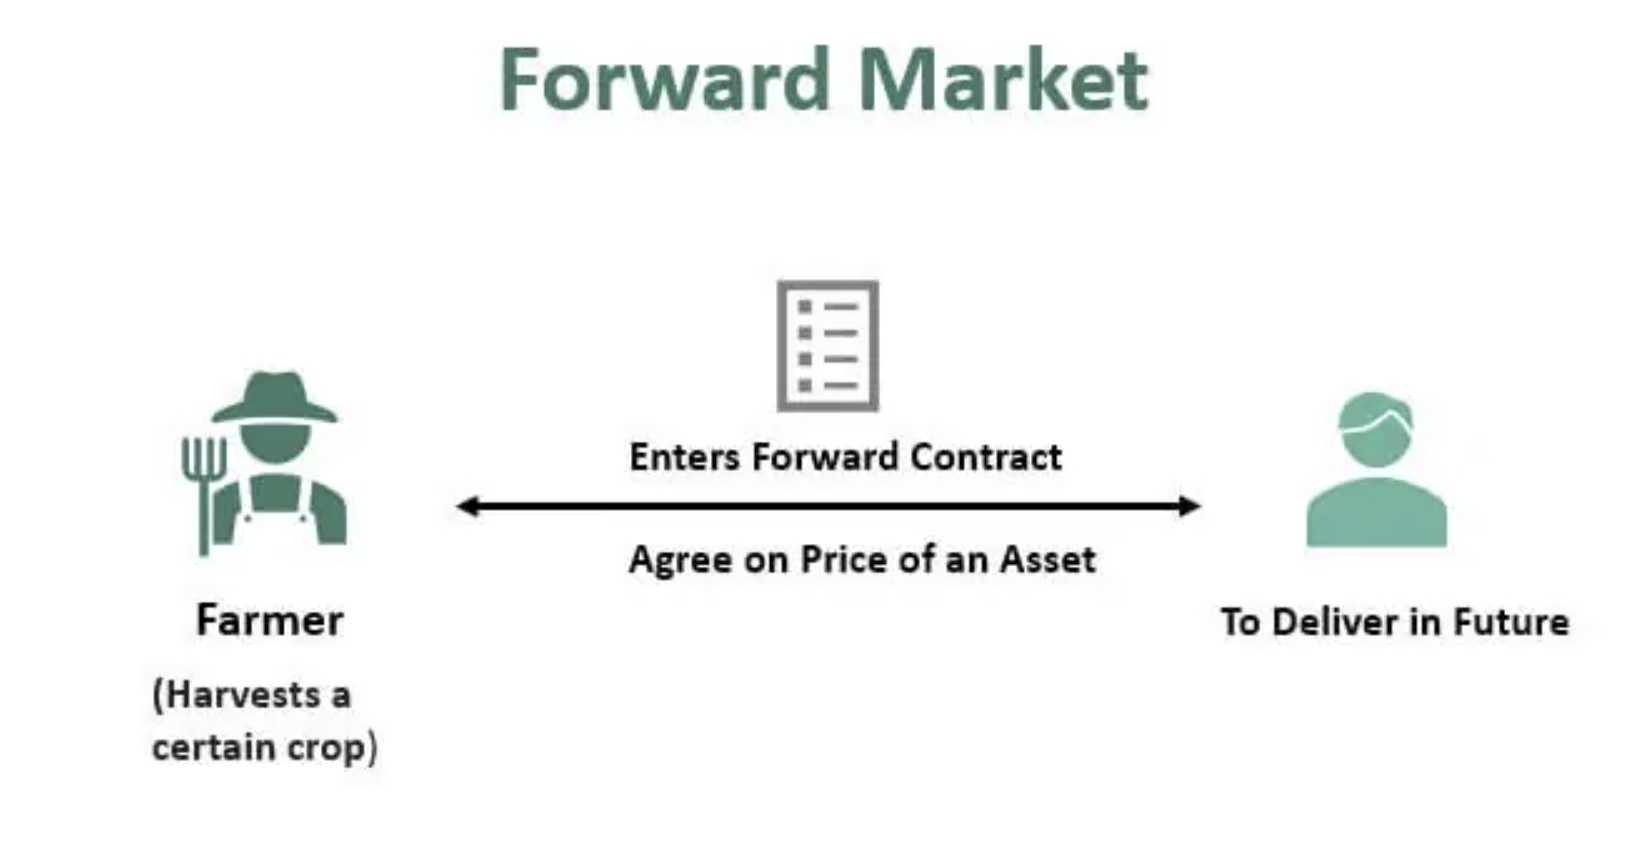 Forward market